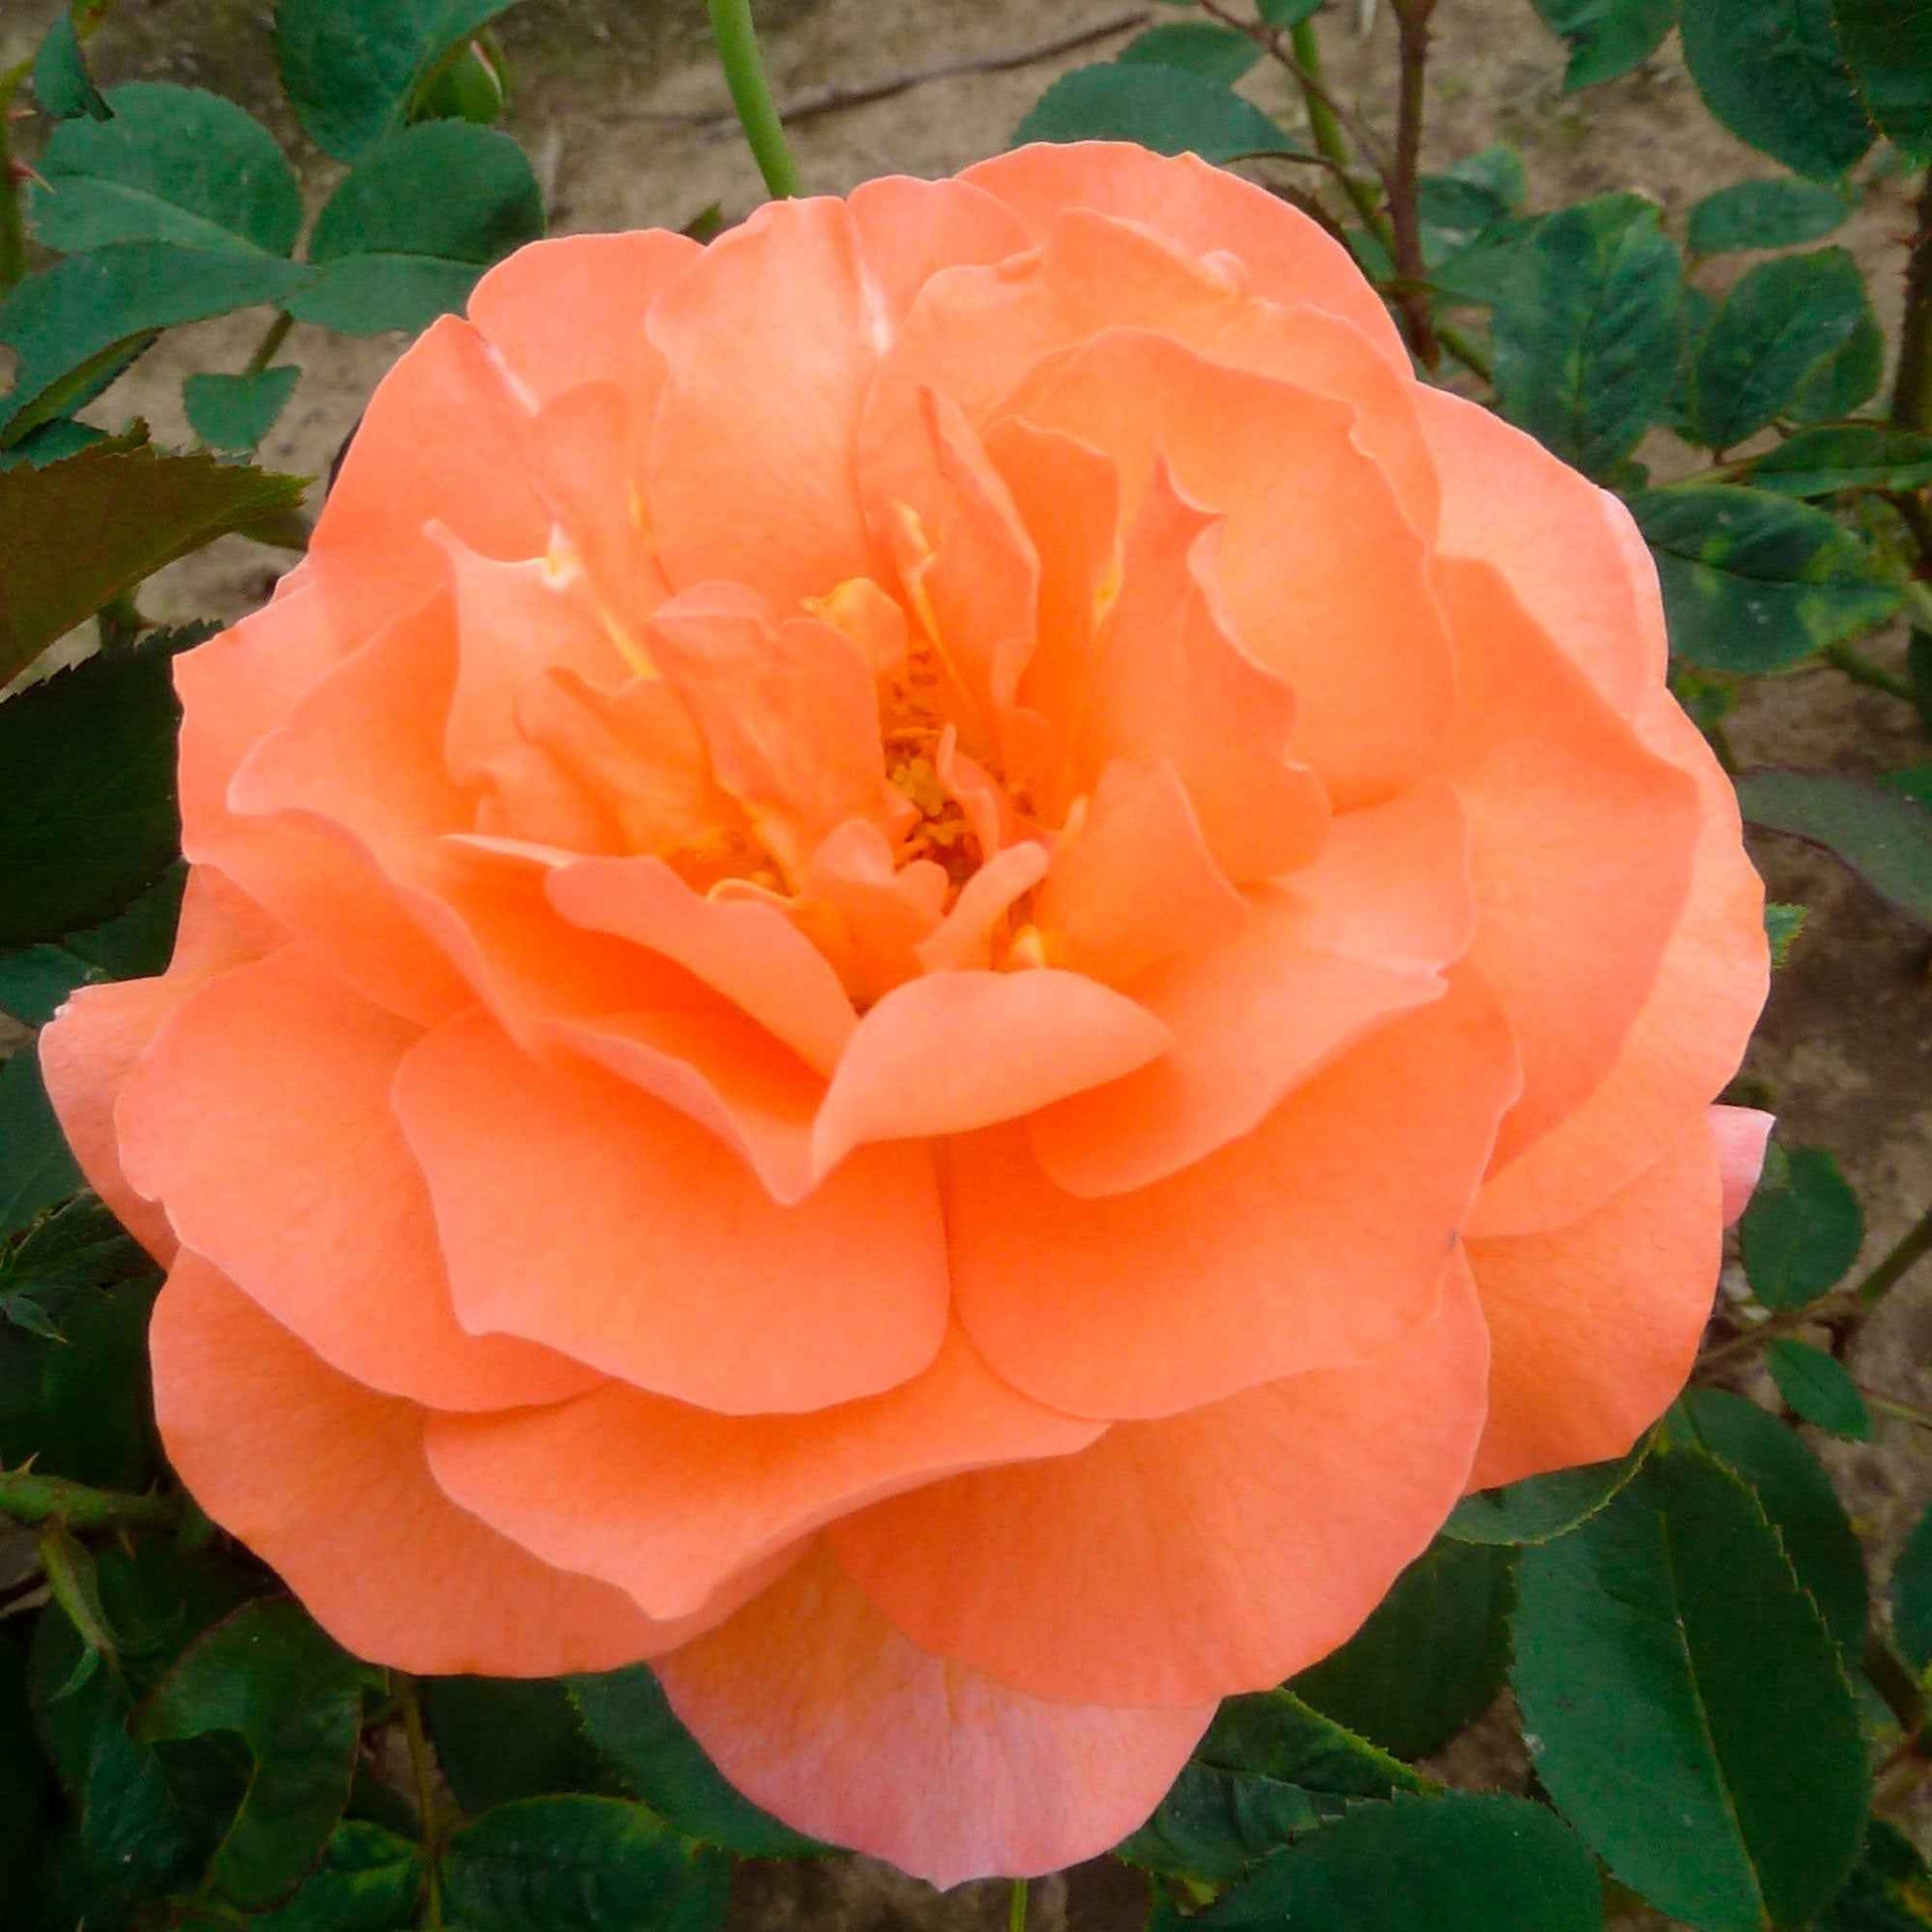 Grootbloemige roos Rosa Tea Time ® Oranje - Winterhard - Plantsoort